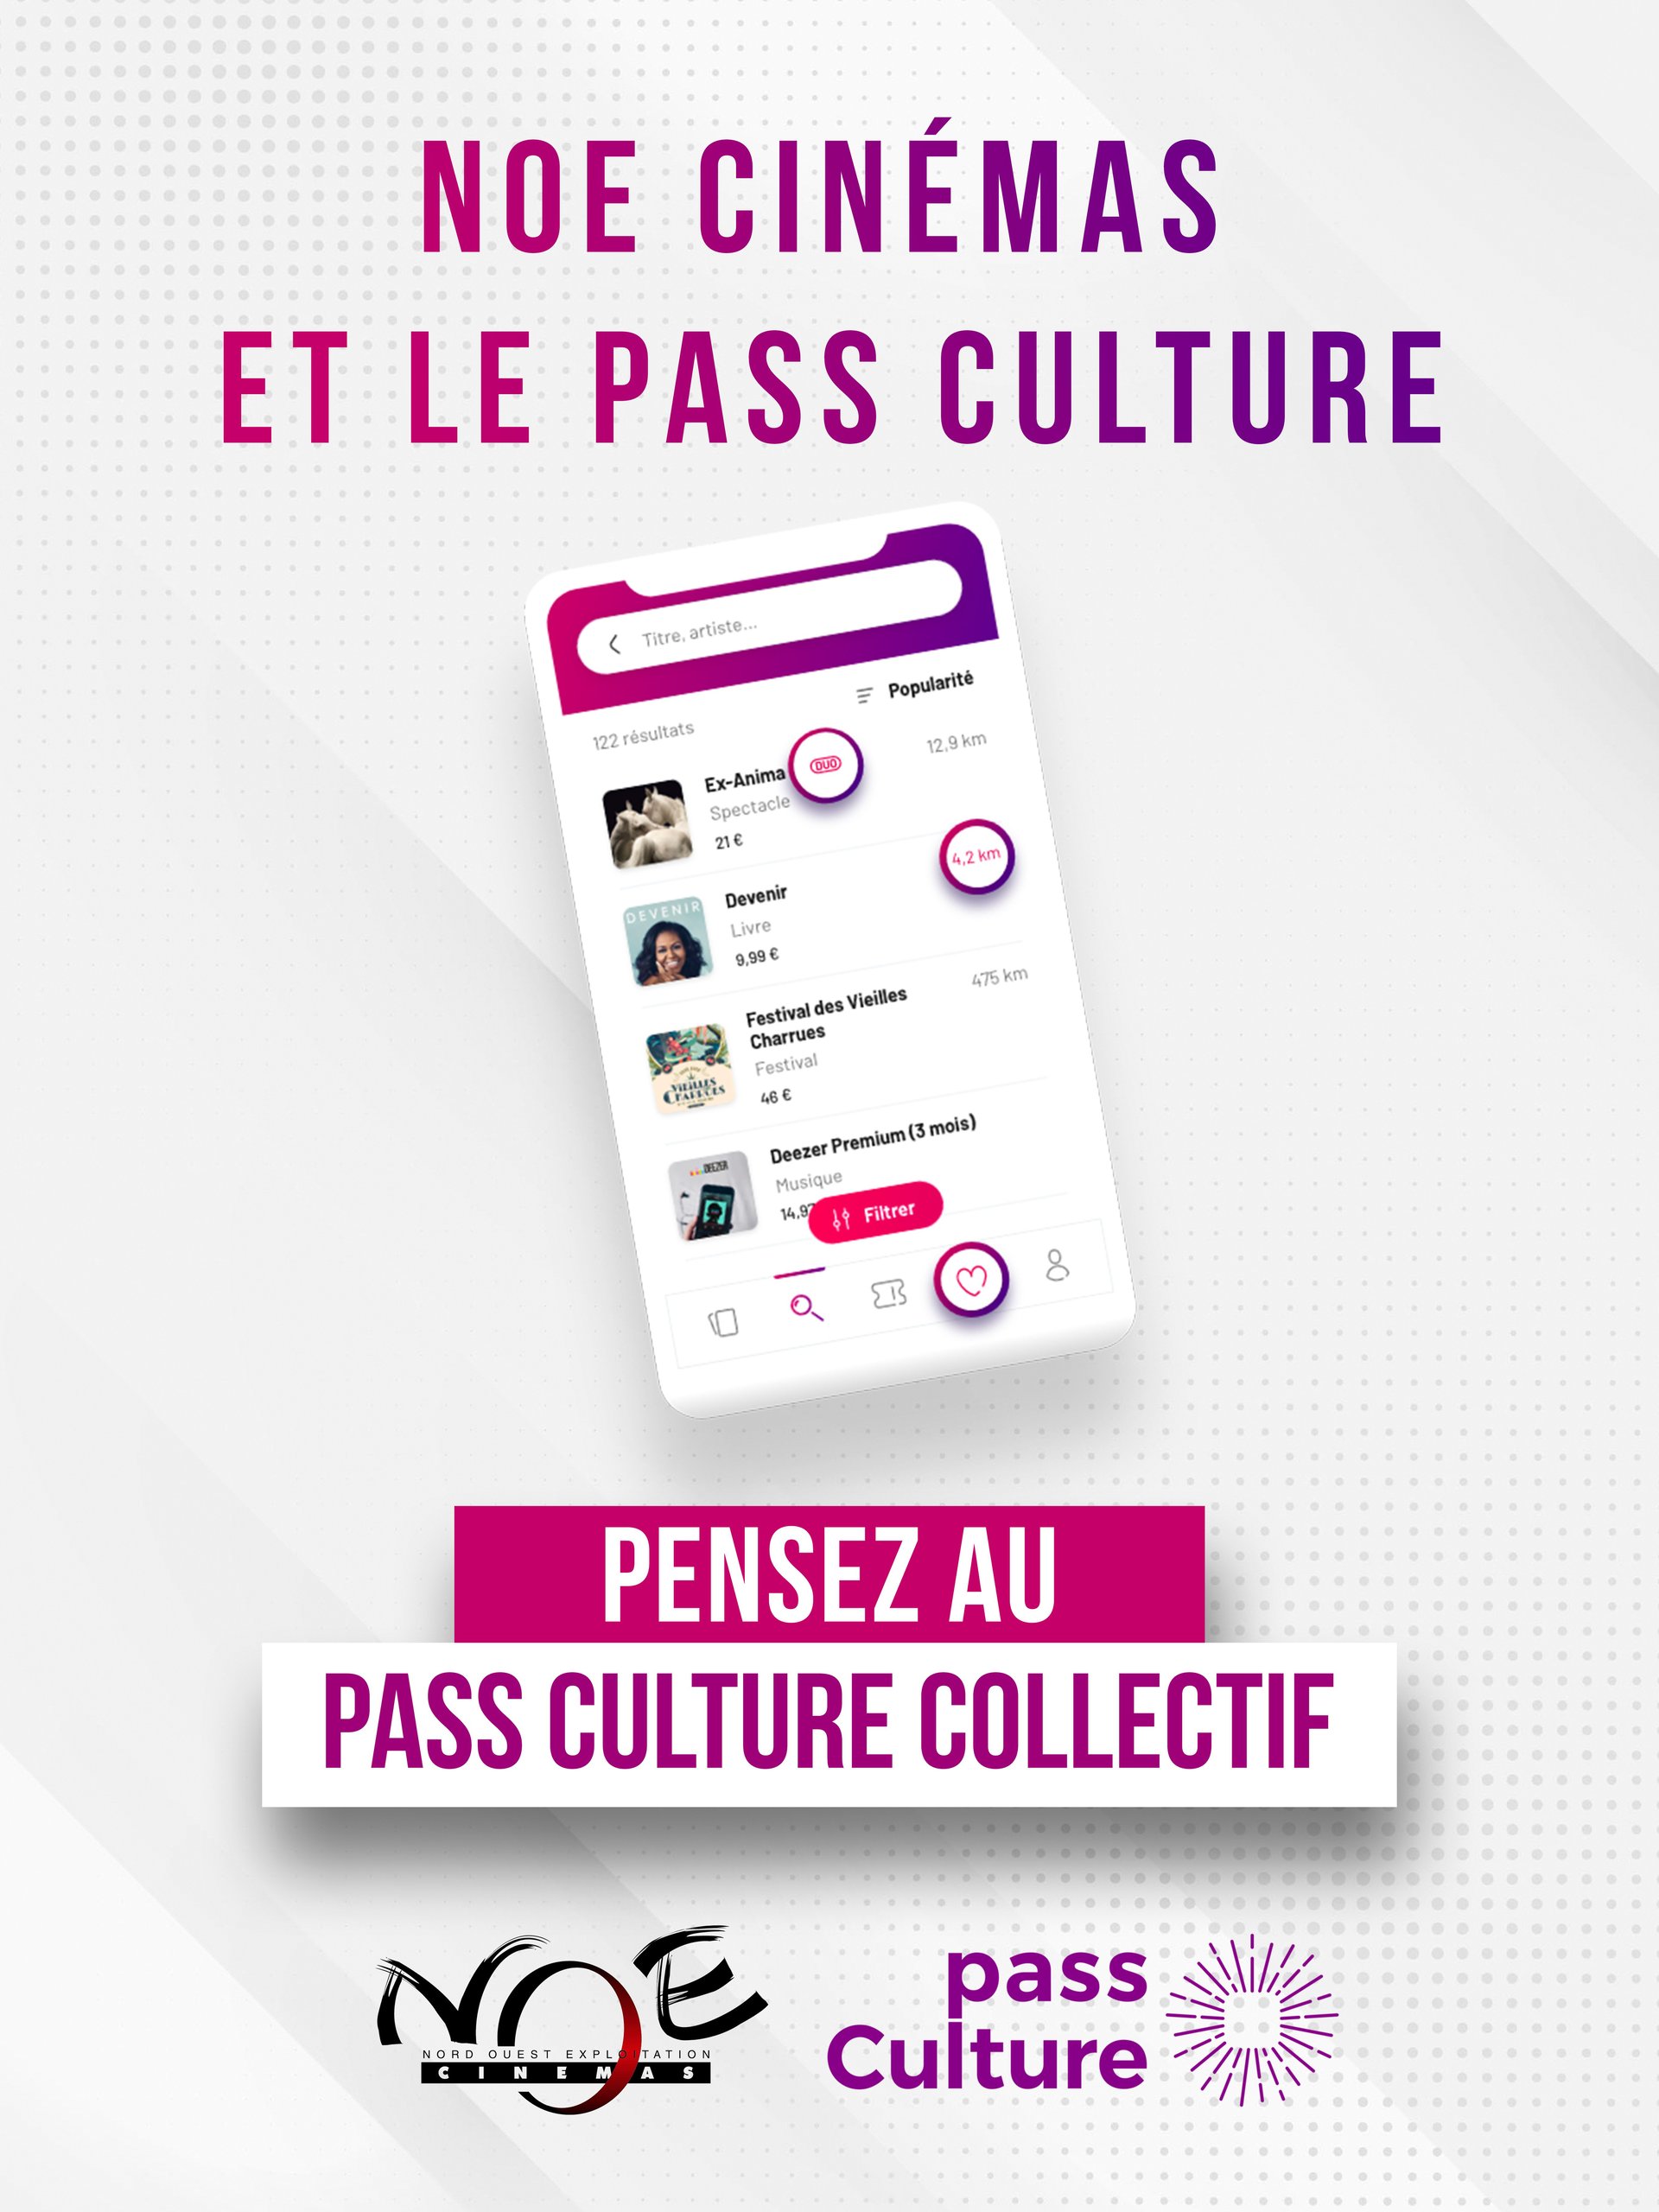  Pass Culture Collectif :